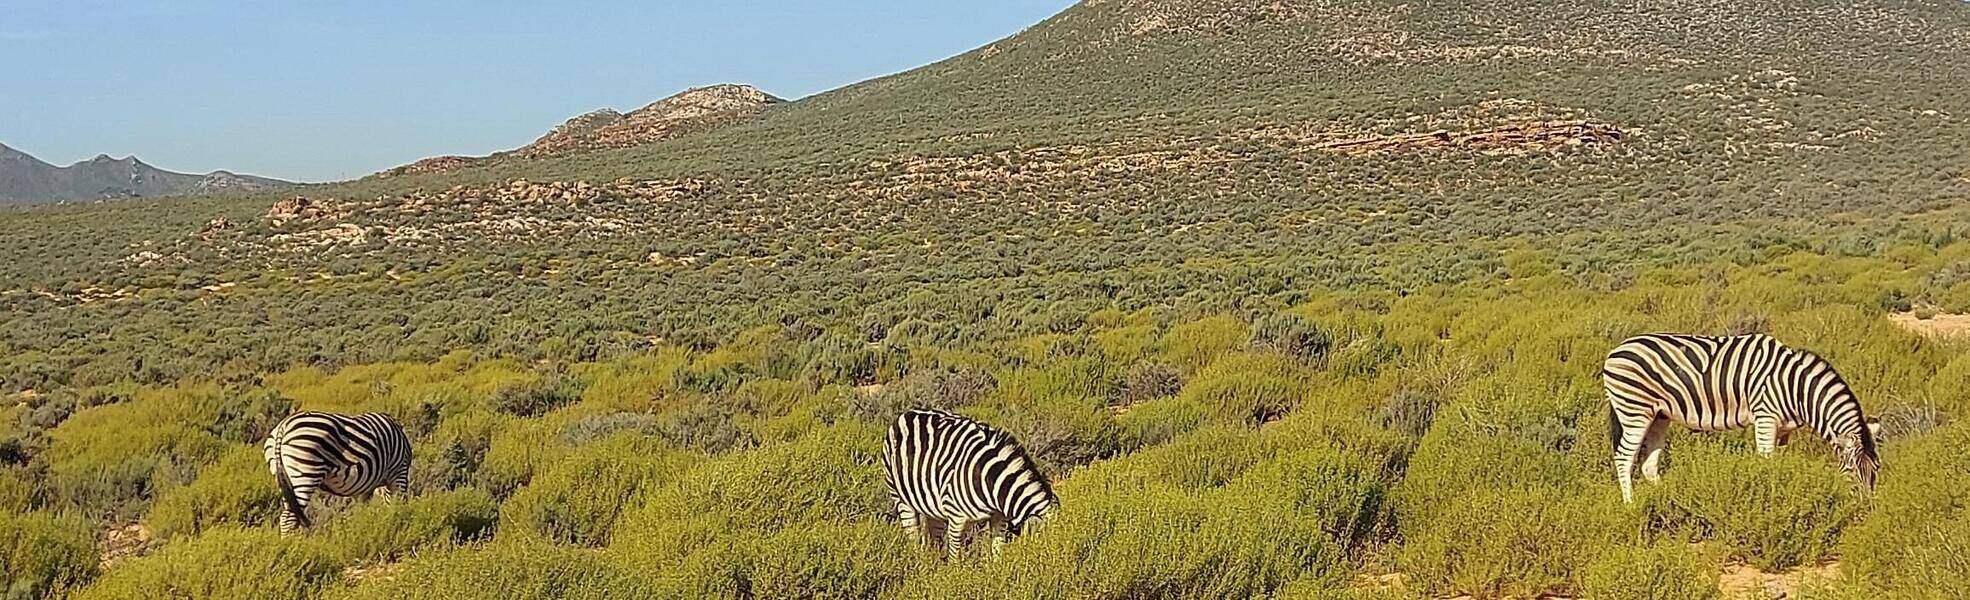 Zebras in South Africa